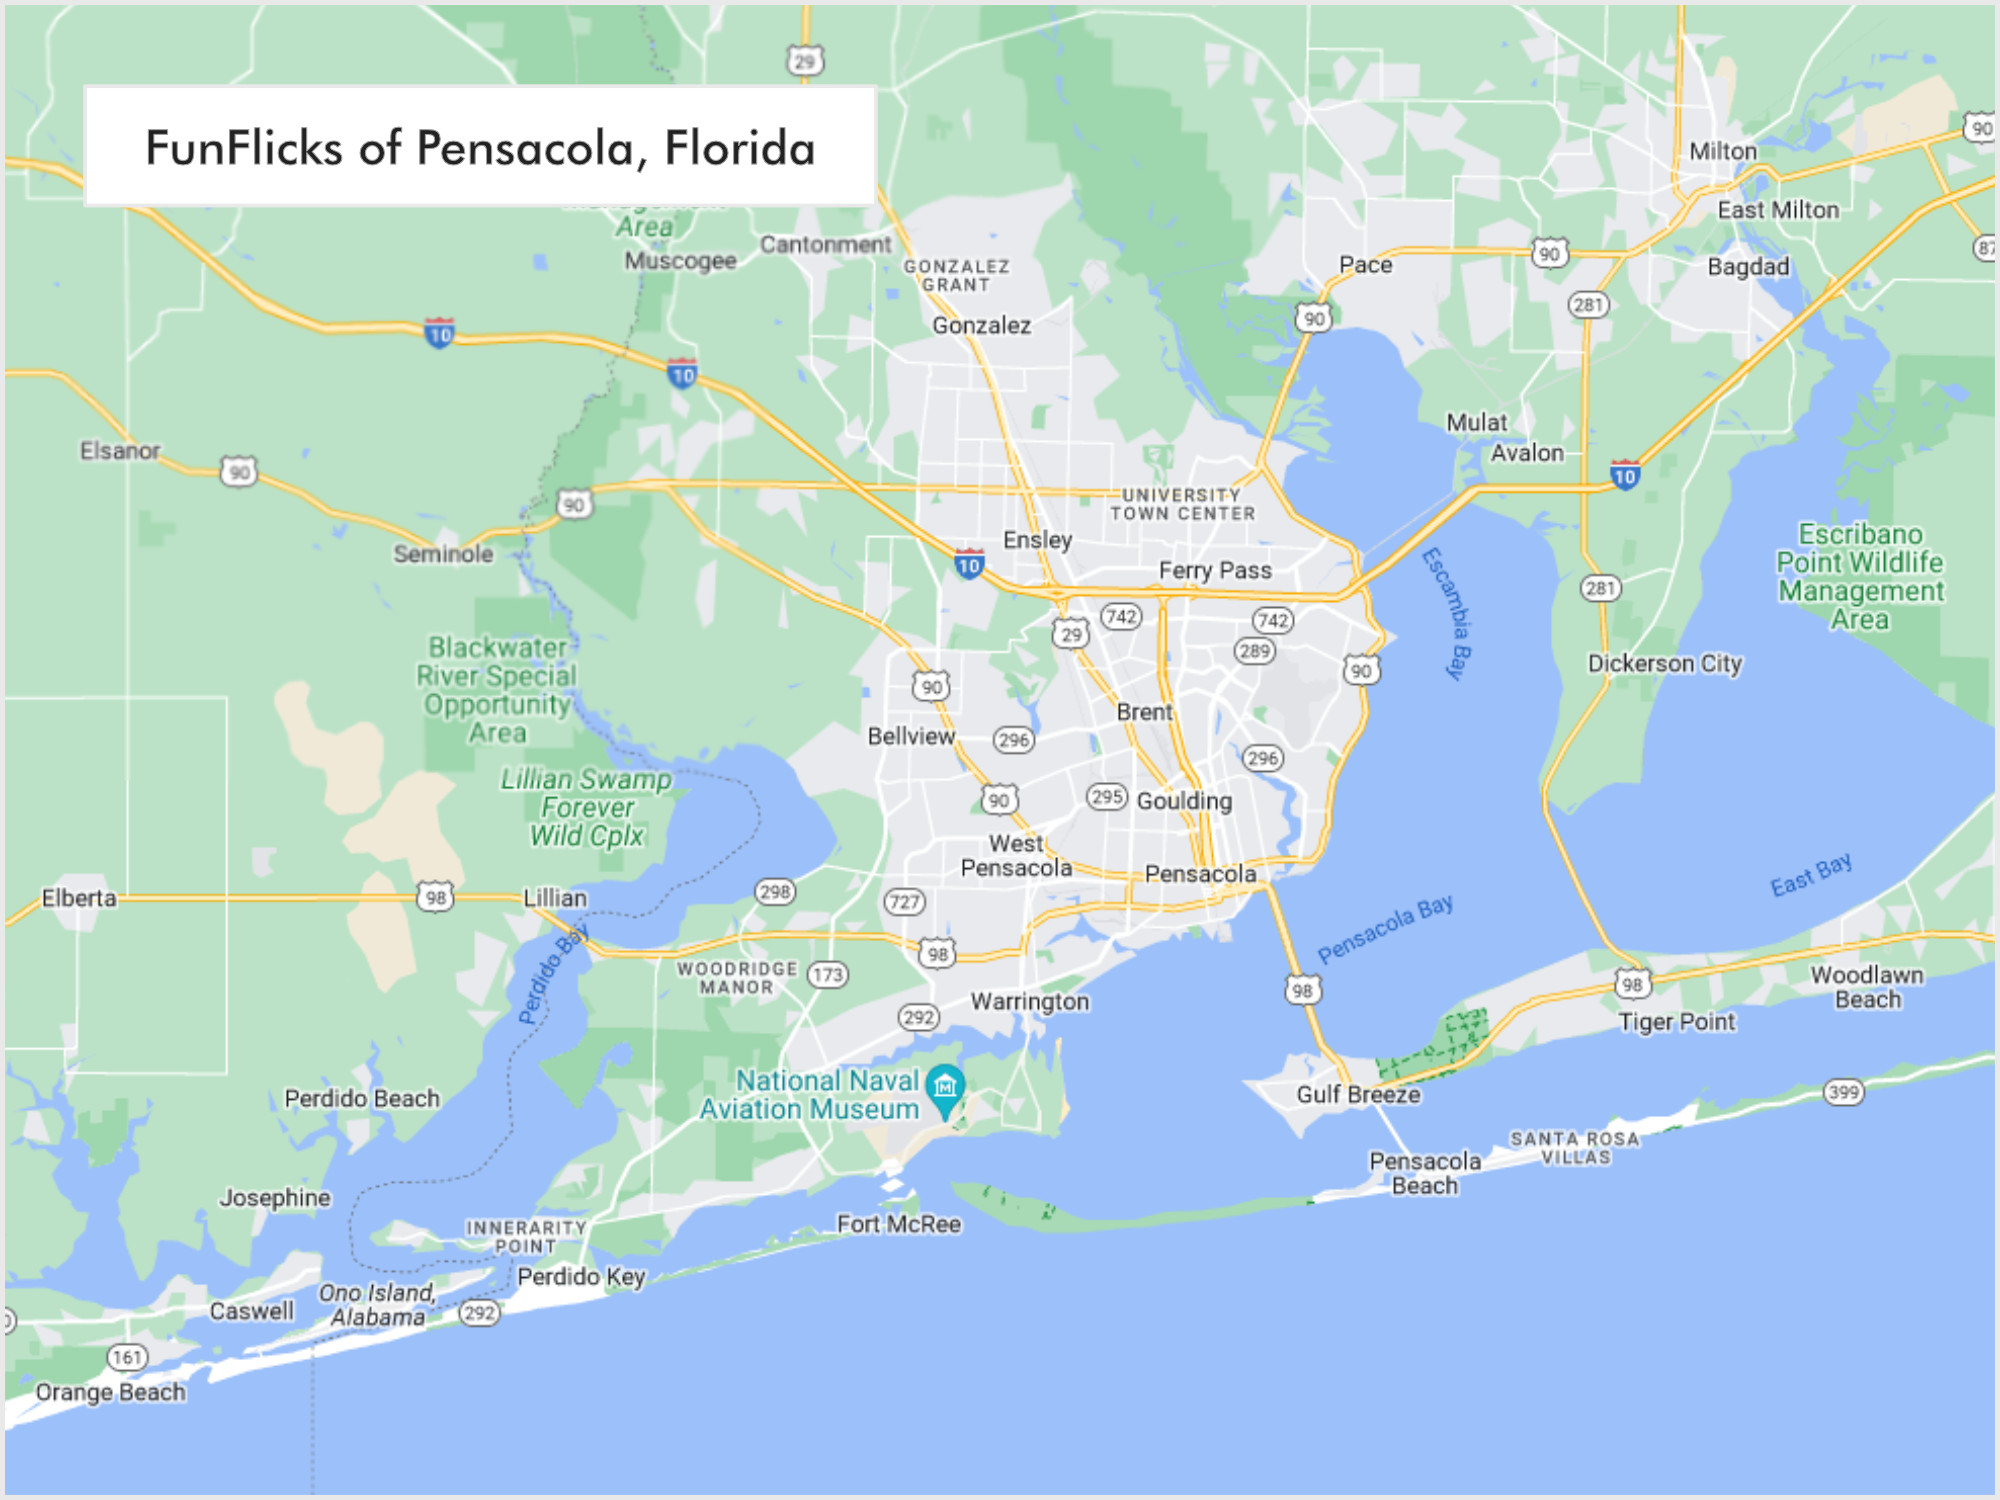 FunFlicks® Pensacola territory map